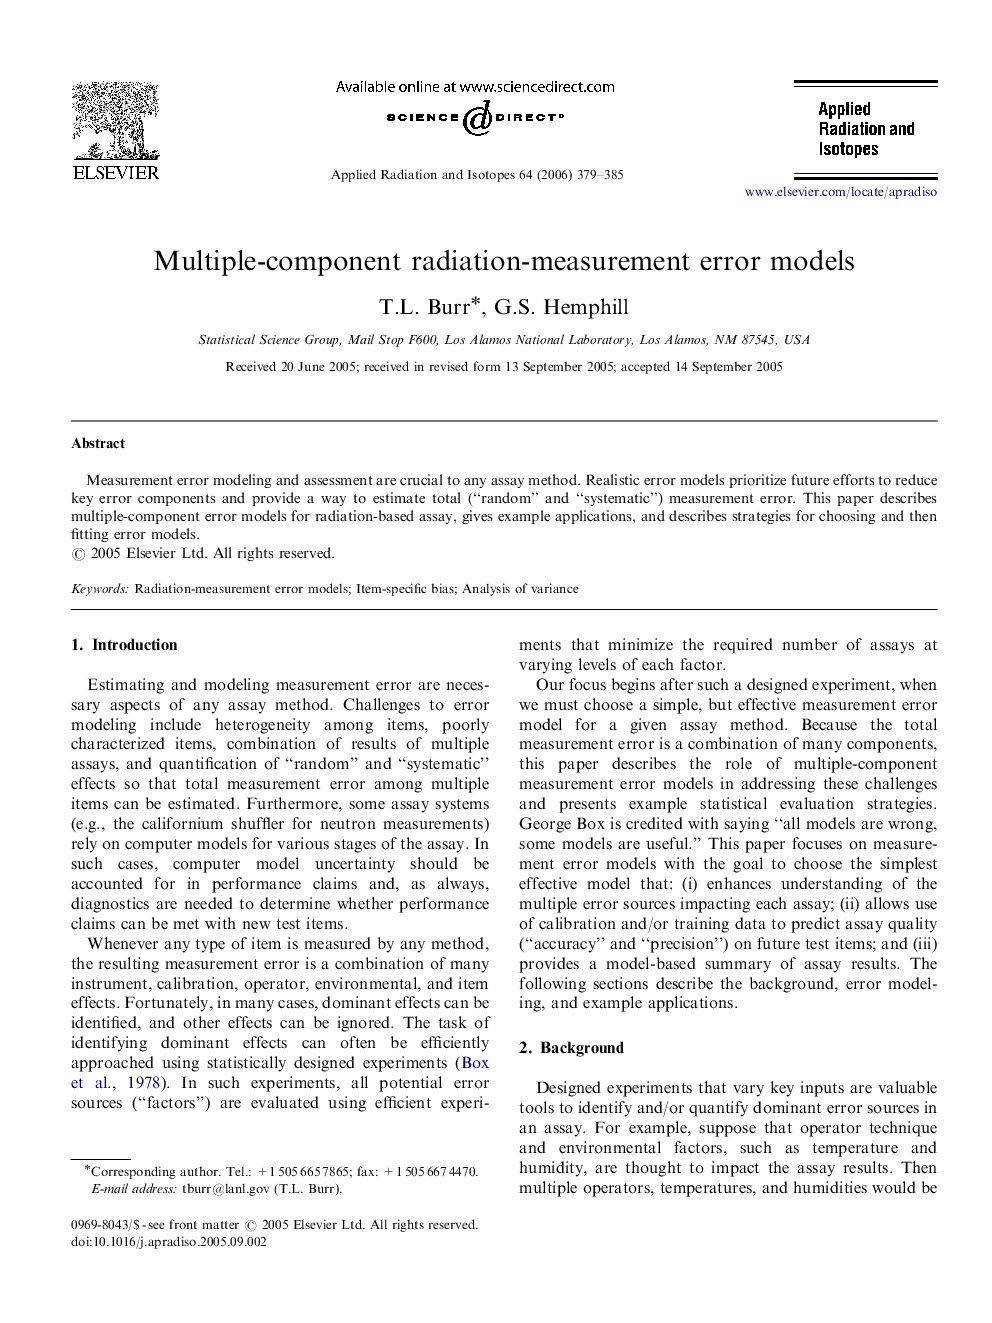 Multiple-component radiation-measurement error models